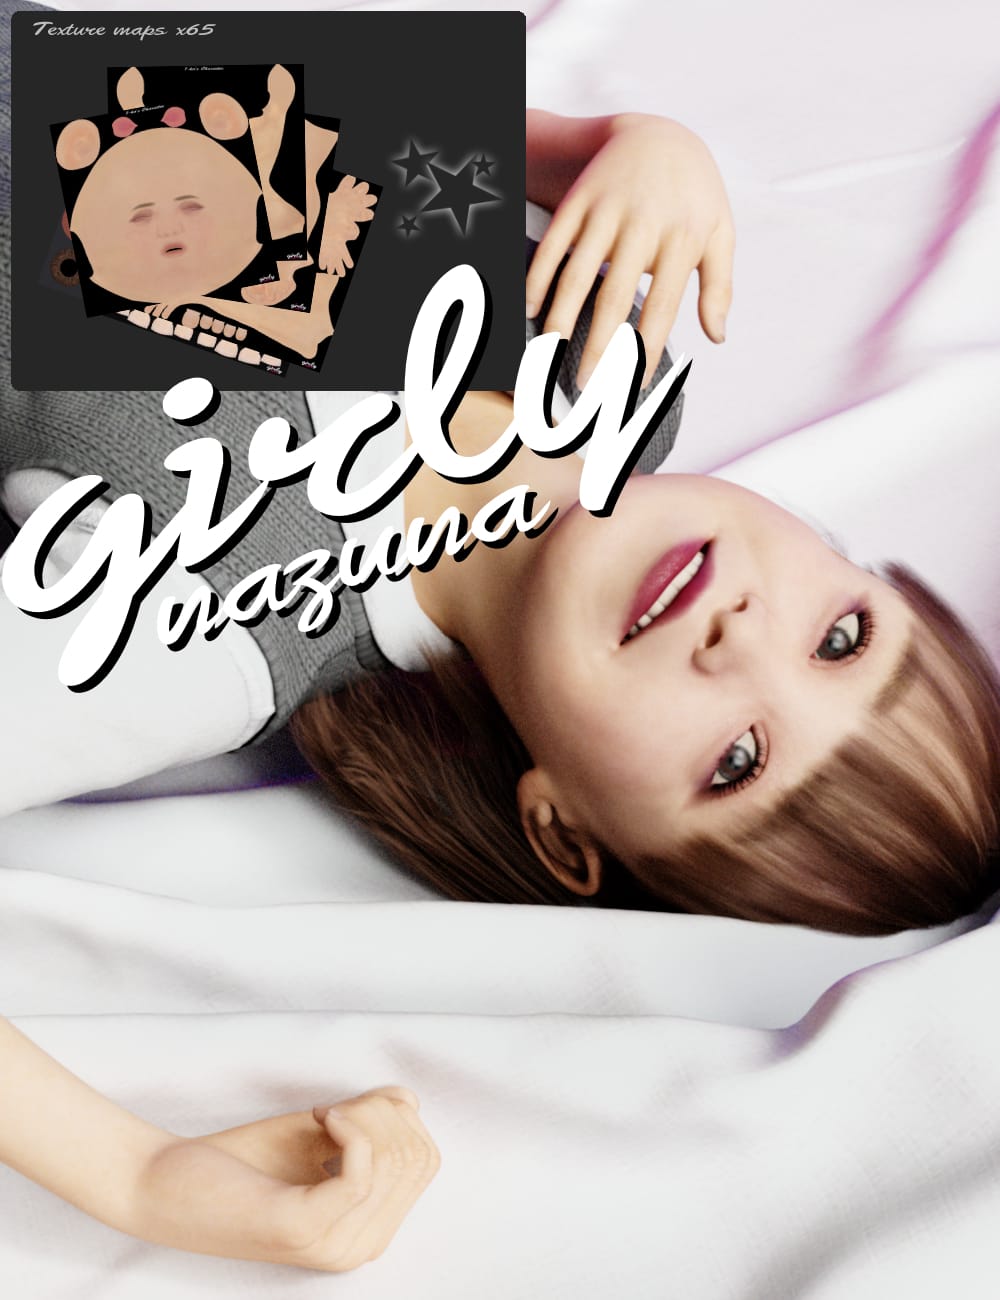 Girly Nazuna for Genesis 8 Female by: 7-ko, 3D Models by Daz 3D